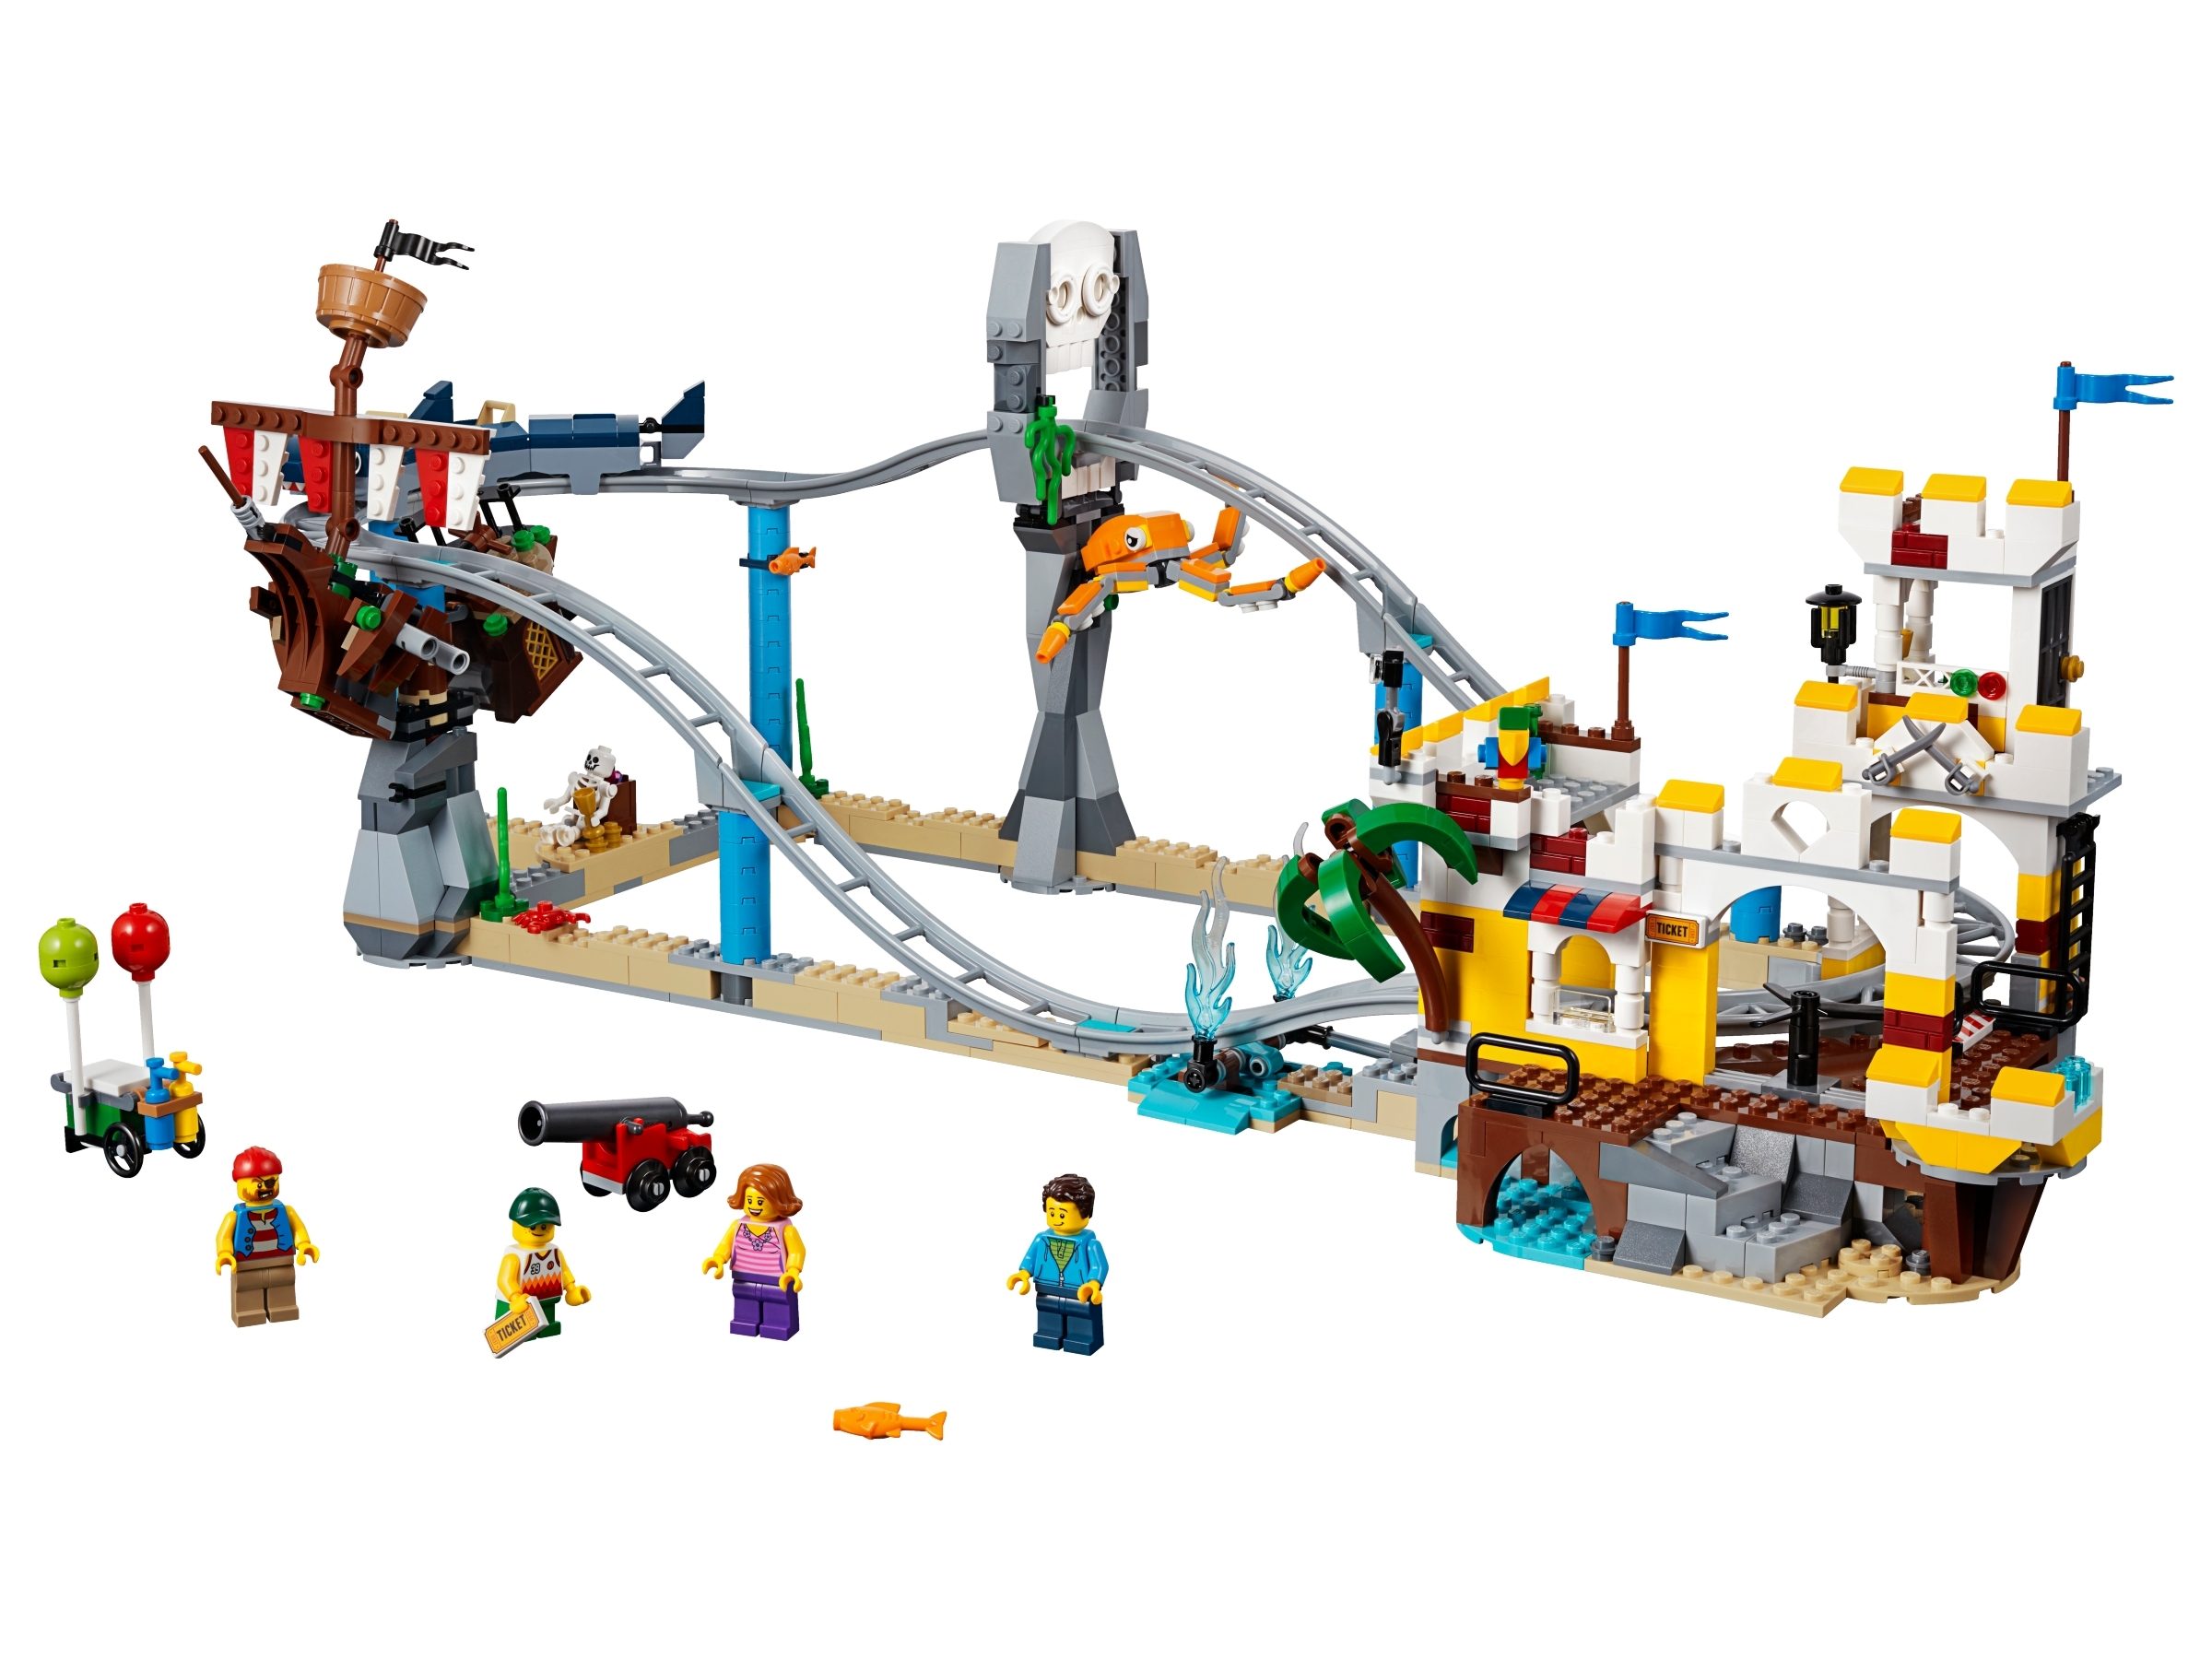 kiwi lade som om Rug 31084 Pirat rutsjebane LEGO sæt, tilbud og anmeldelser